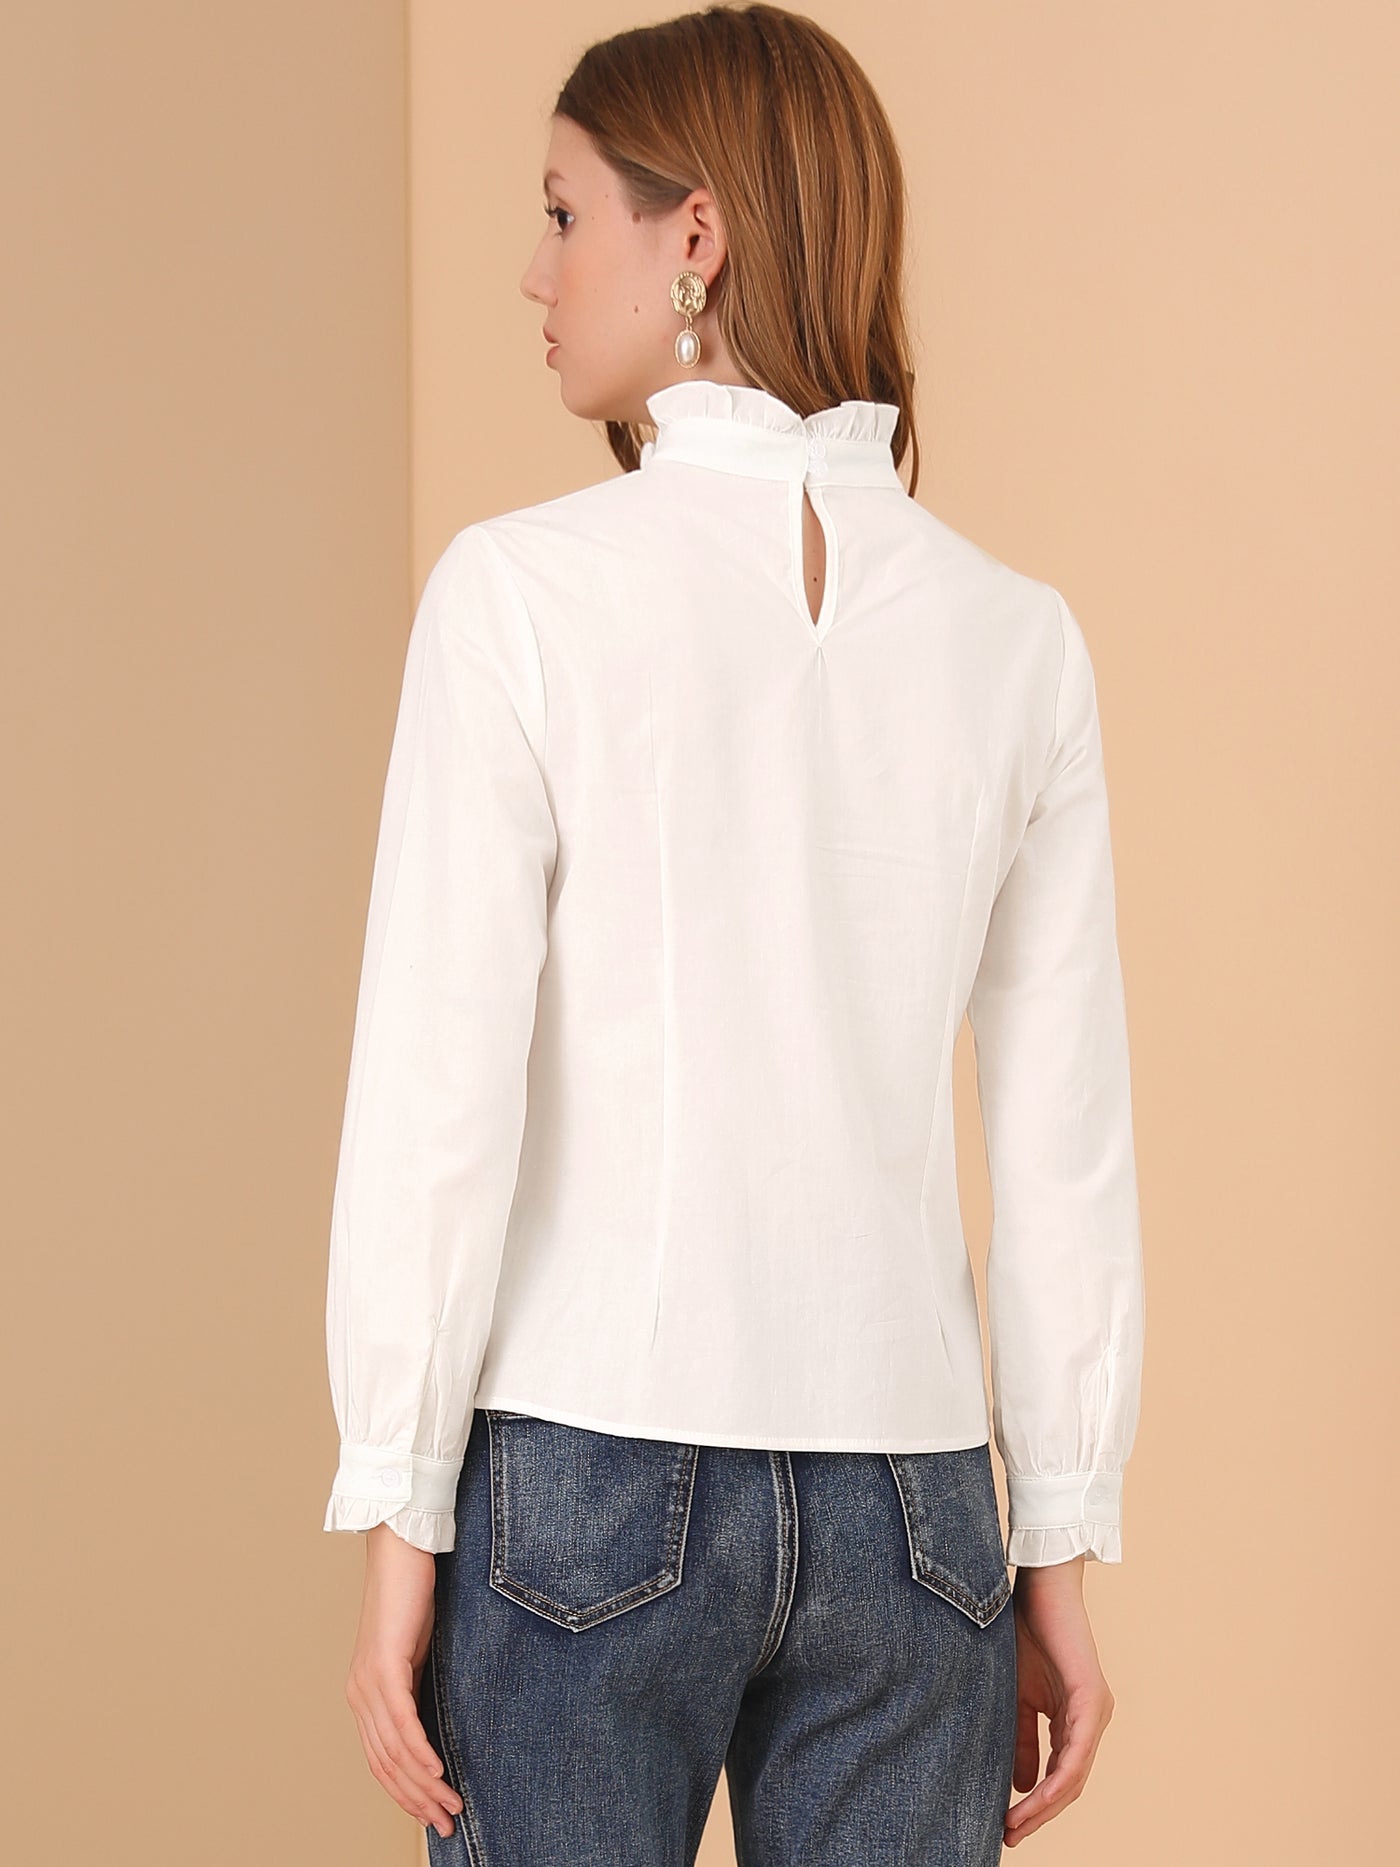 Allegra K Cotton Shirt Ruffle Mock Neck Lace Peasant Long Sleeve Tops